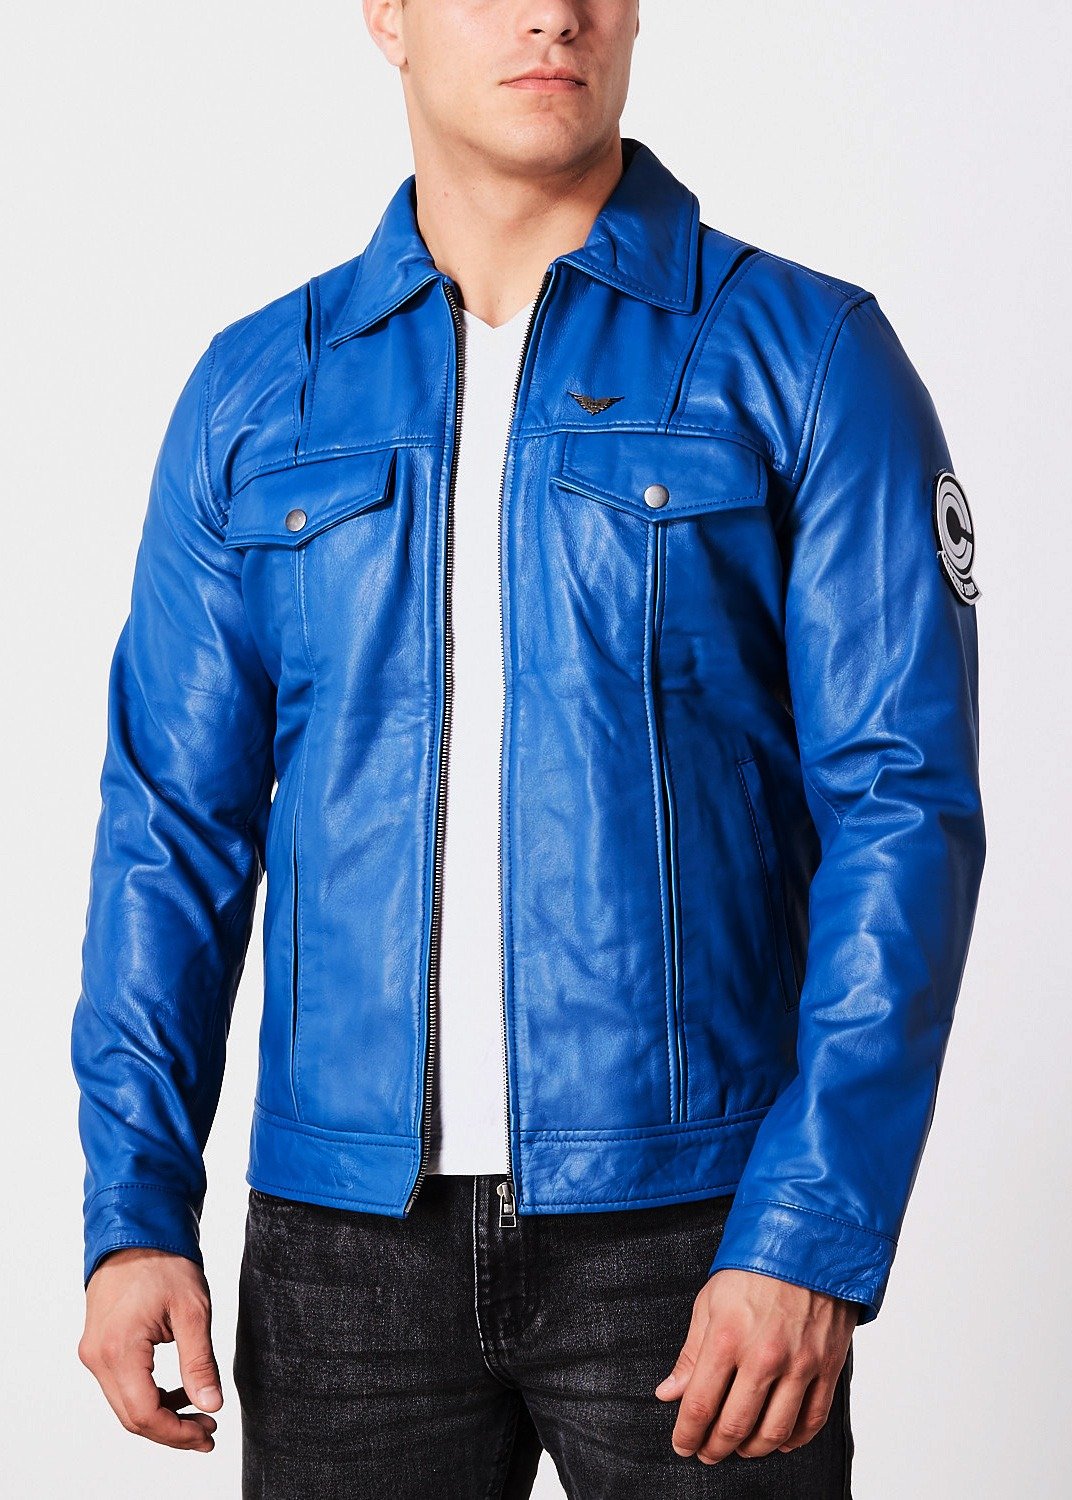 Mens Dragon Ball Z Future Trunks Leather Jacket